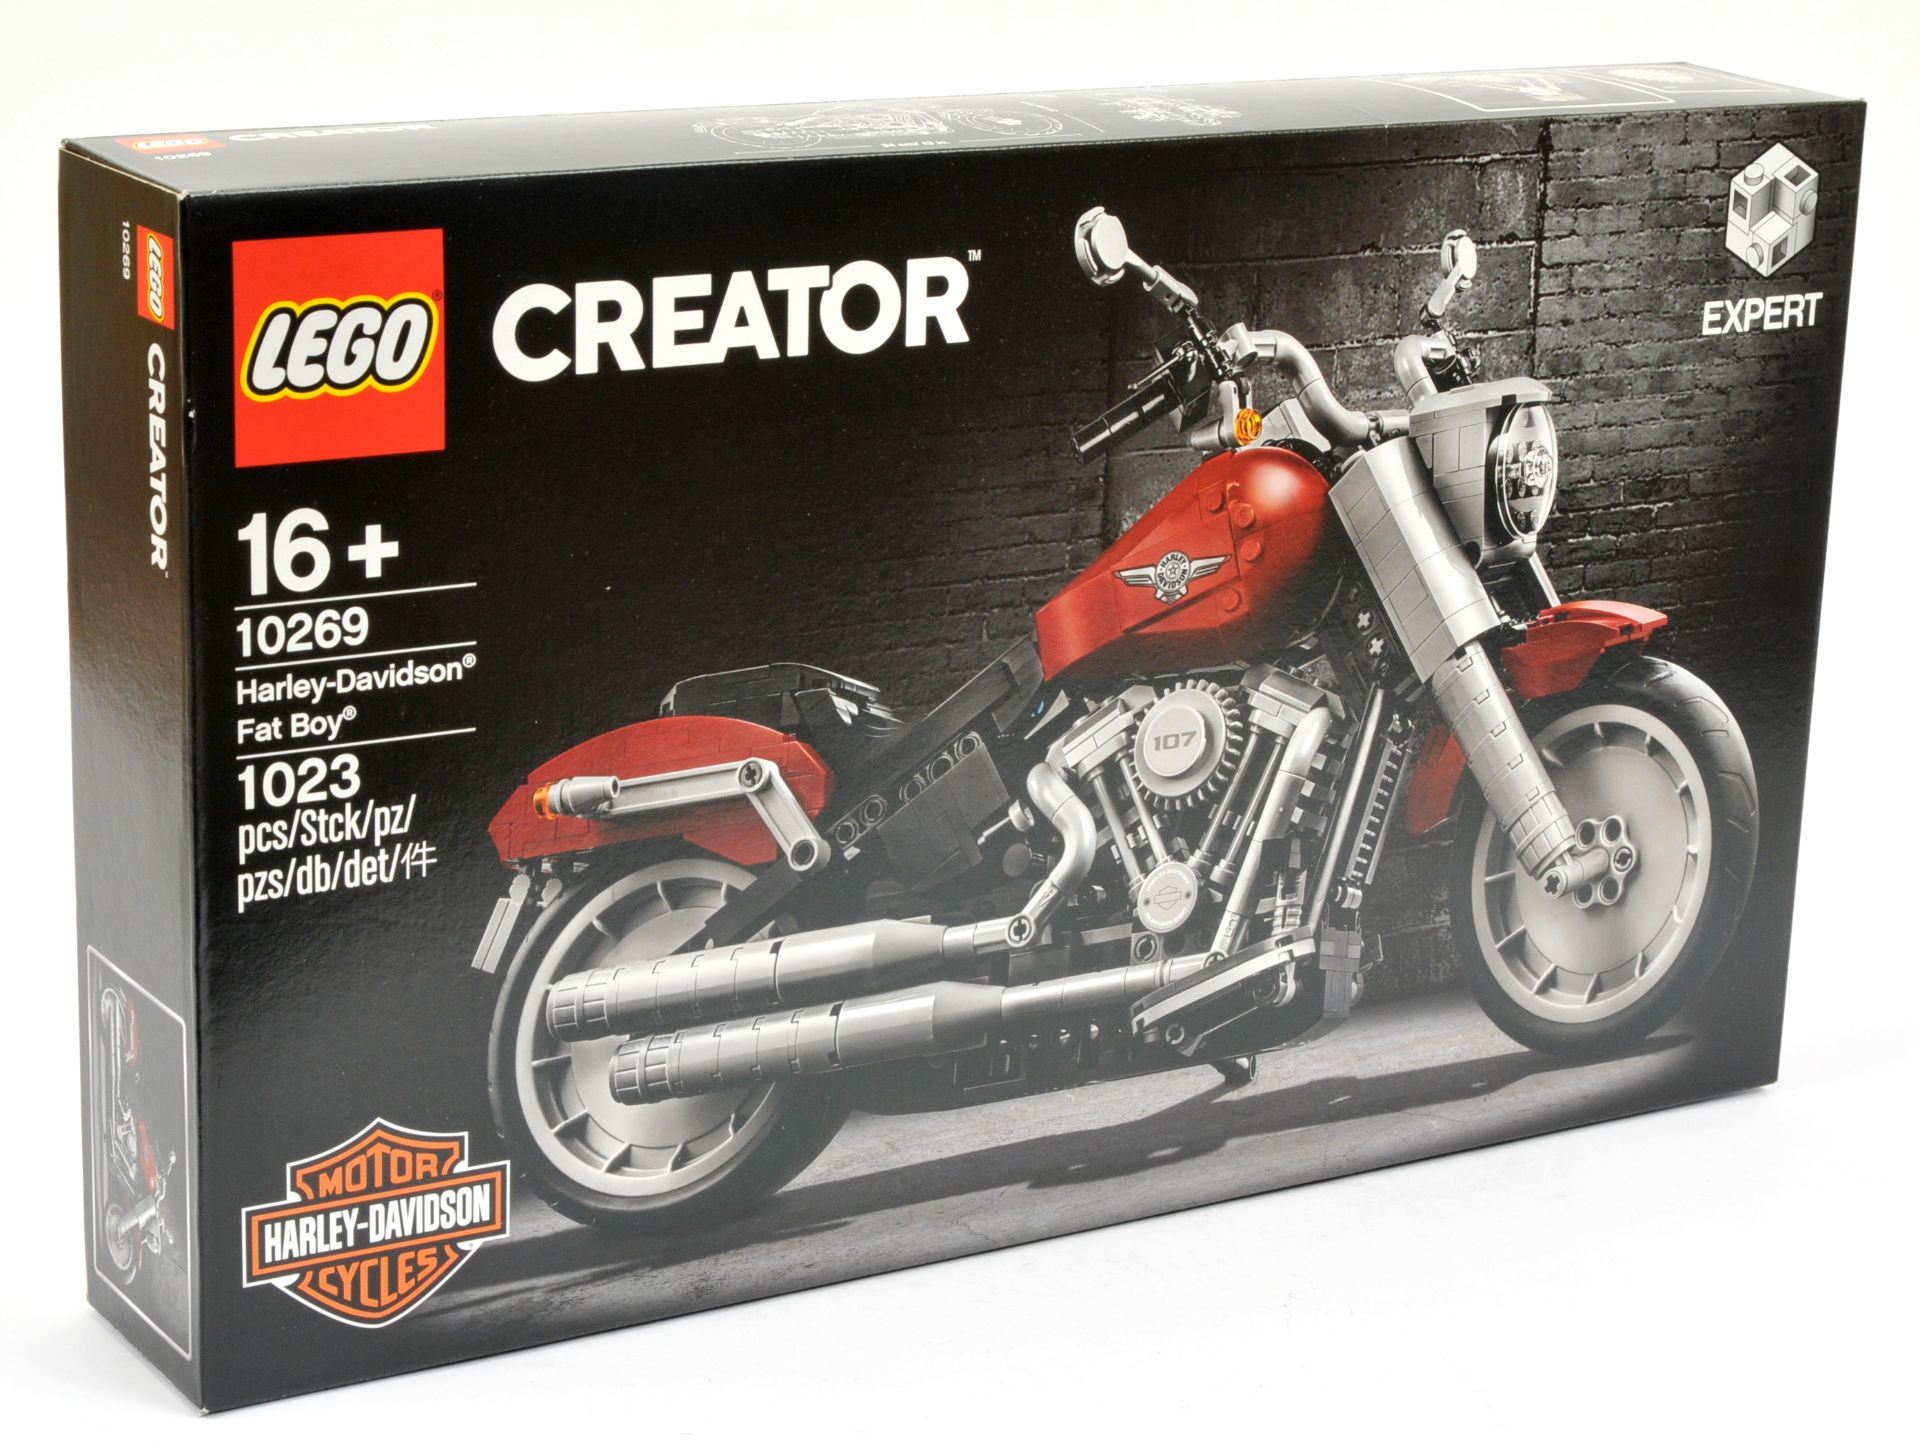 Lego 10269 Creator - Harley-Davidson Fat Boy, within Near Mint sealed box.